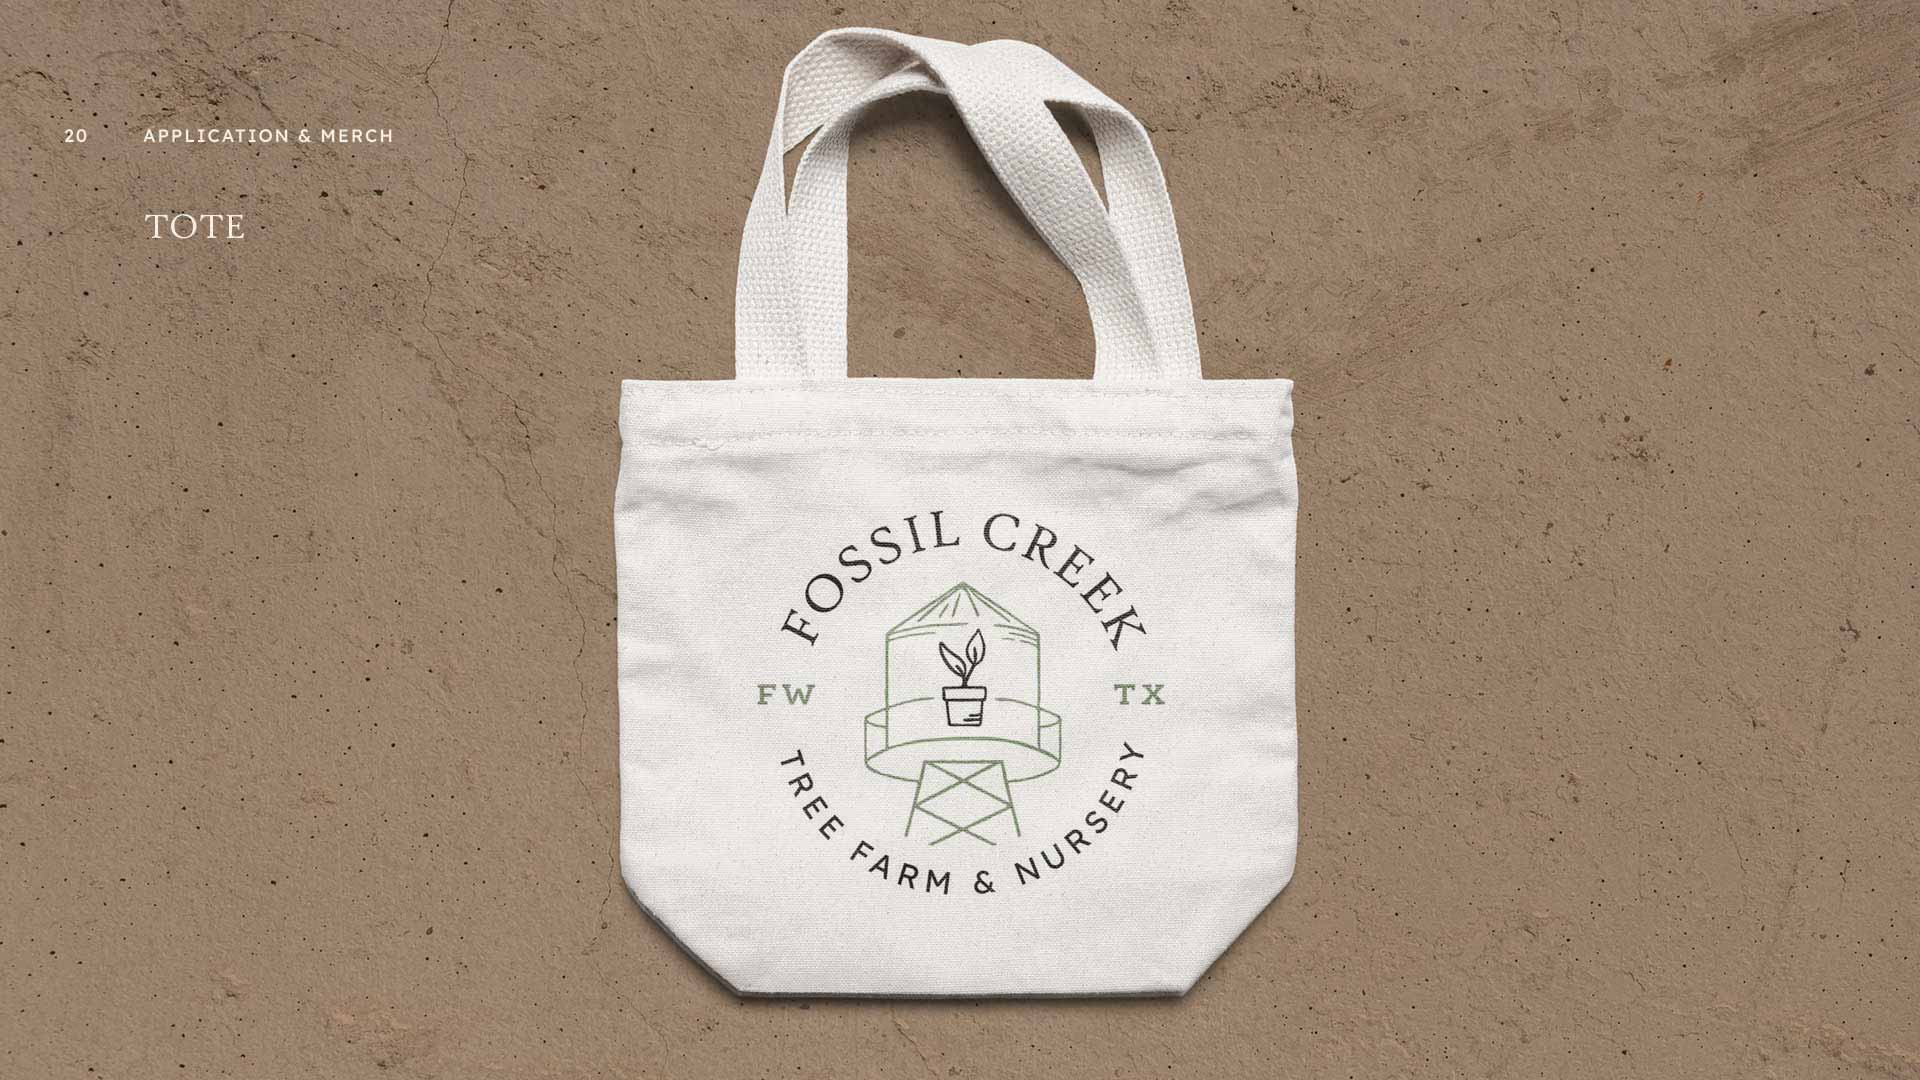 Fossil Creek Tree Farm brand design on a tote bag